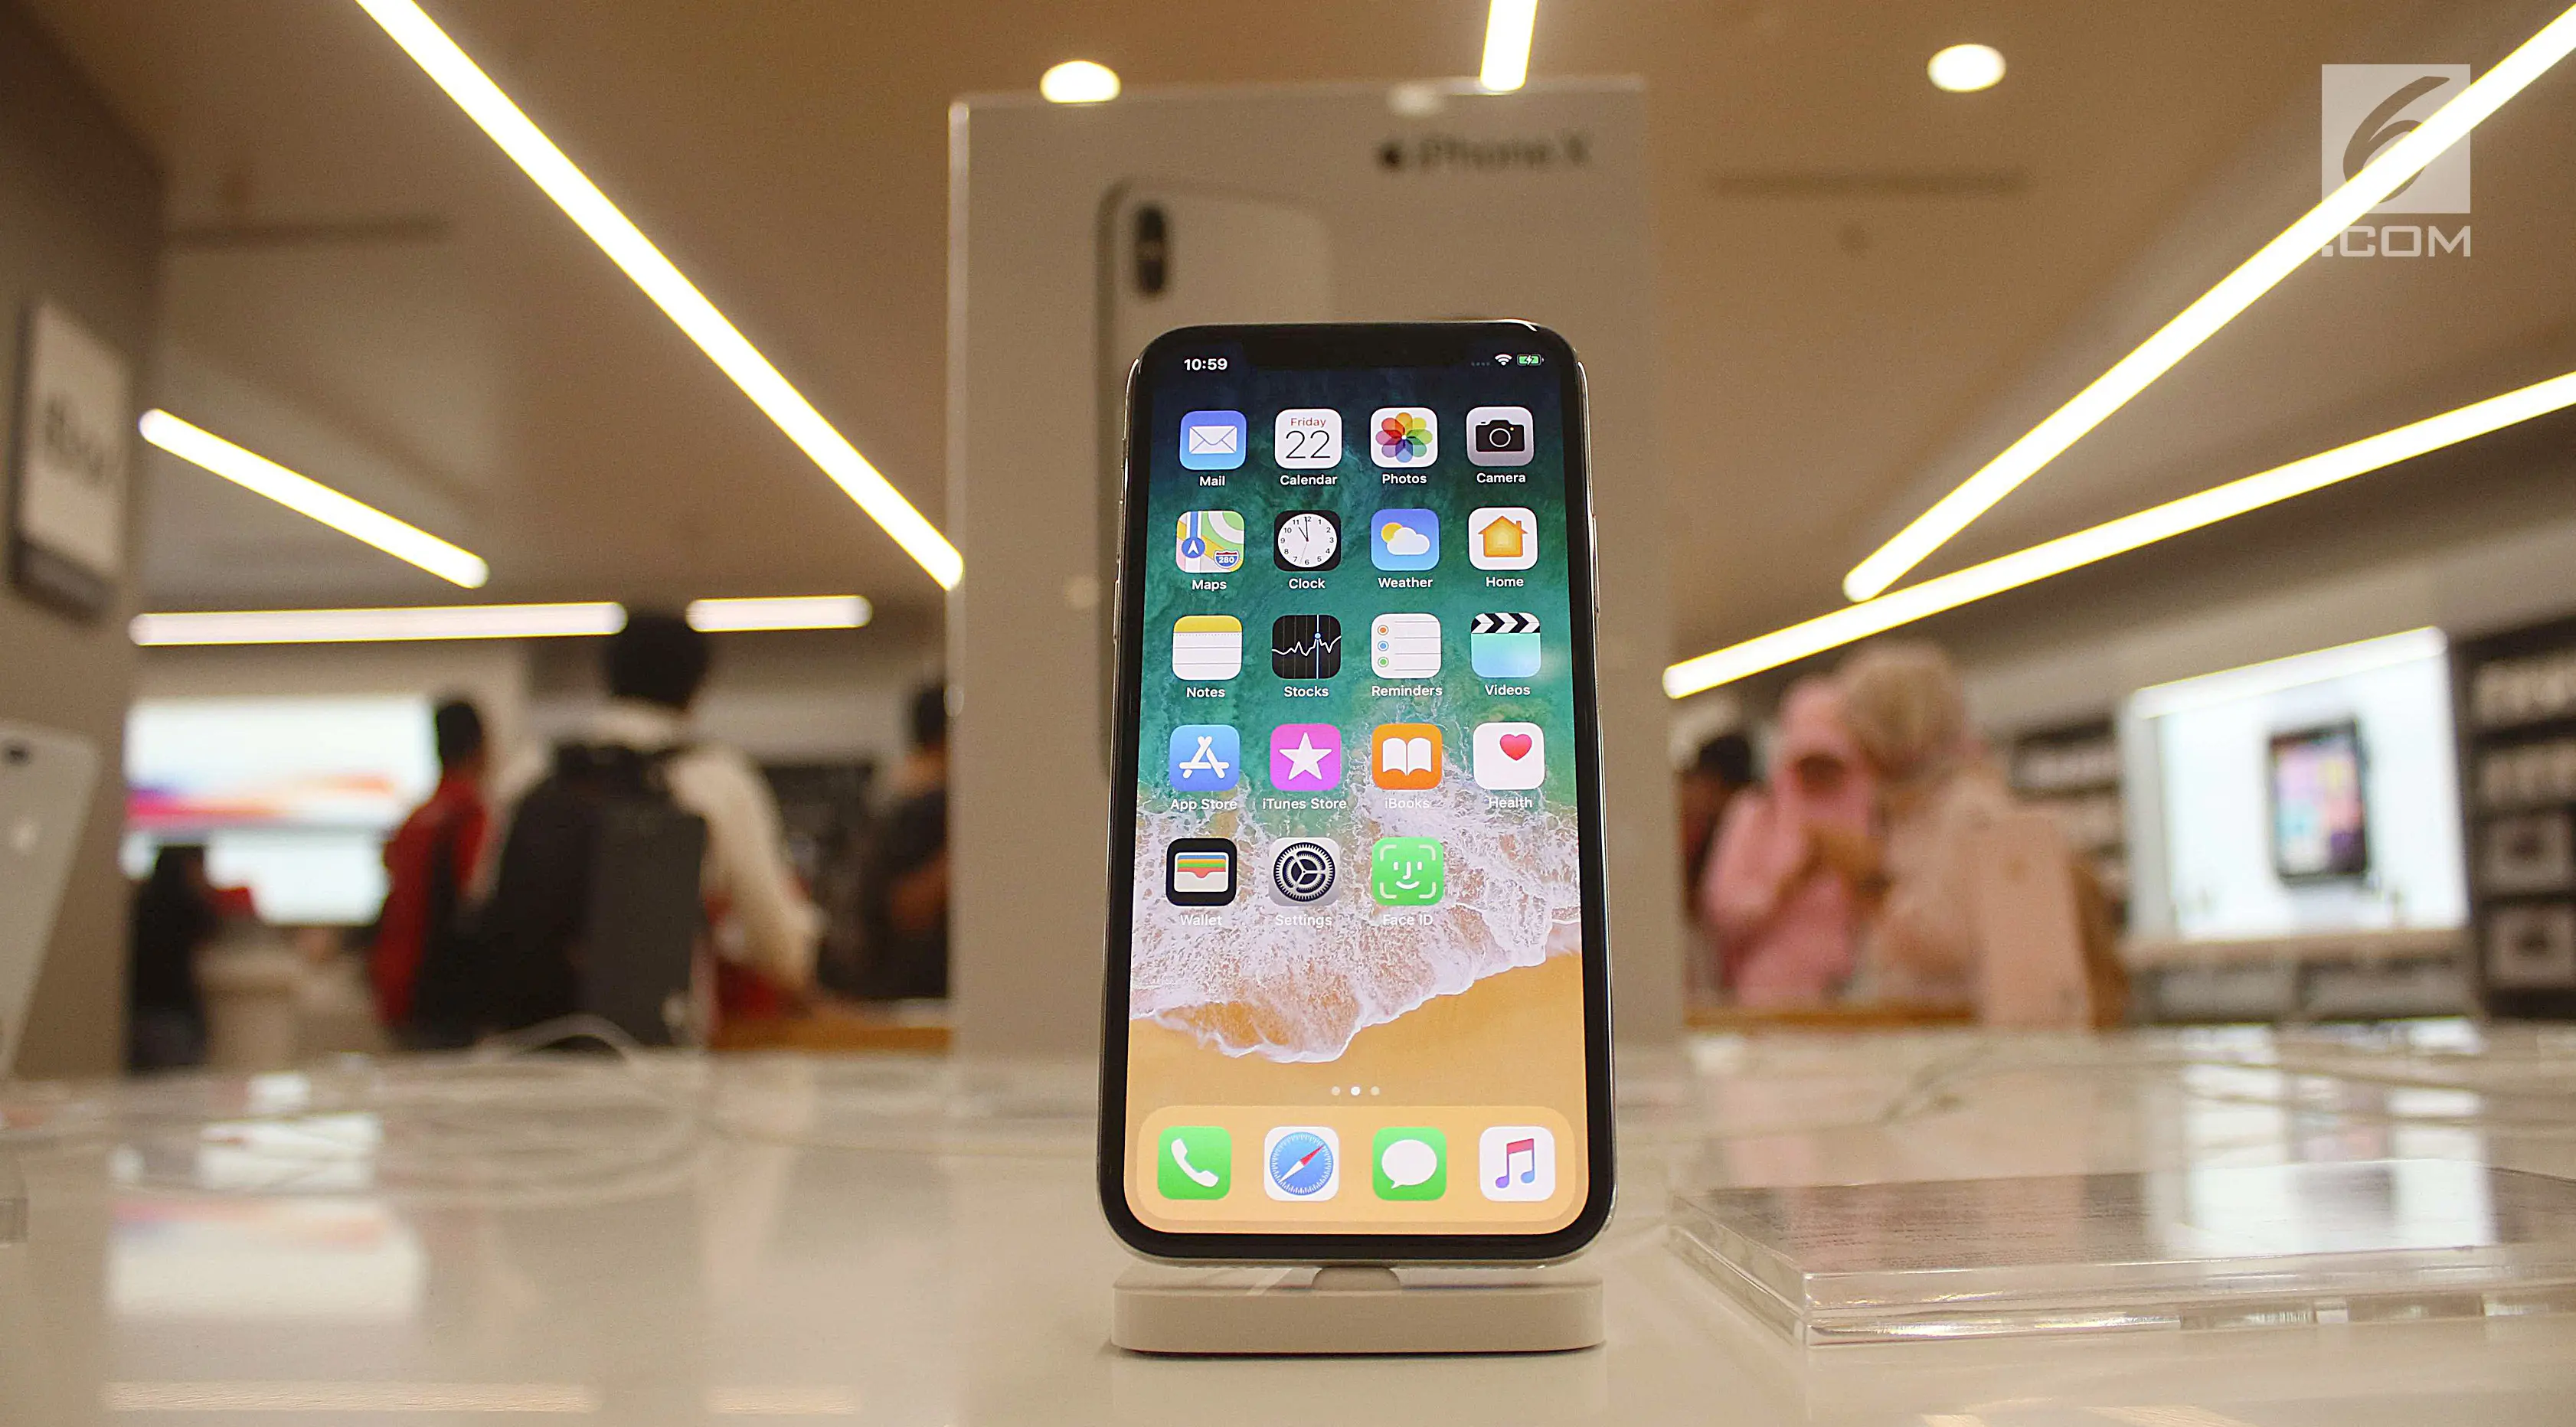 Sebuah iPhone X terbaru dipajang di gerai iBox, Central Park, Jakarta, Jumat (22/12). iPhone 8, iPhone 8 Plus, dan iPhone X dijual dengan harga 15 hingga 20 juta rupiah tergantung kapasitas memori. (/Angga Yuniar)